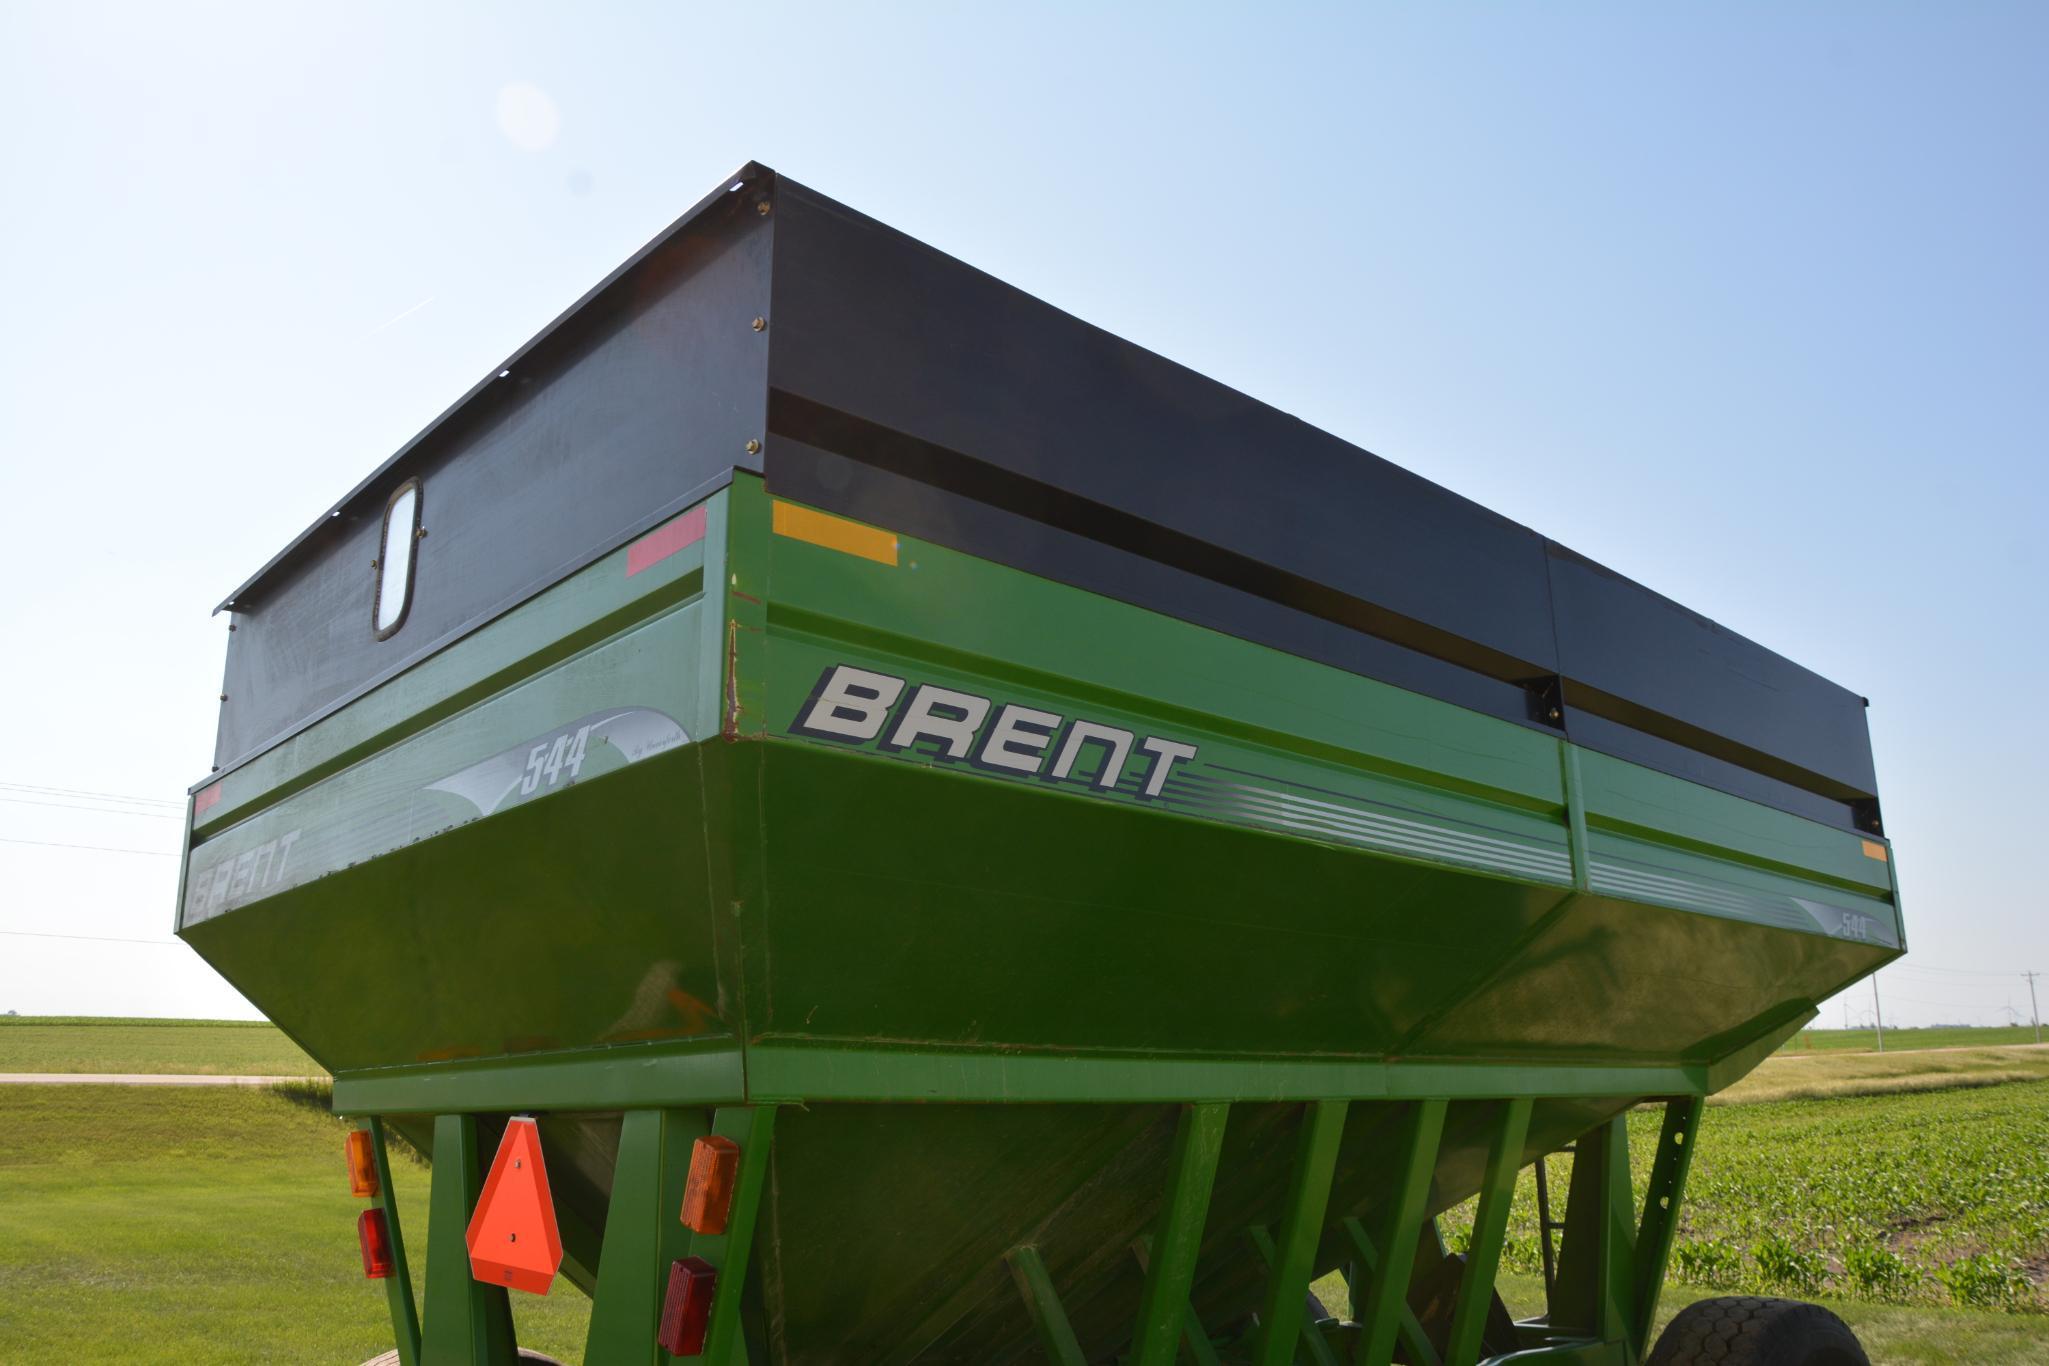 Brent 544 gravity wagon